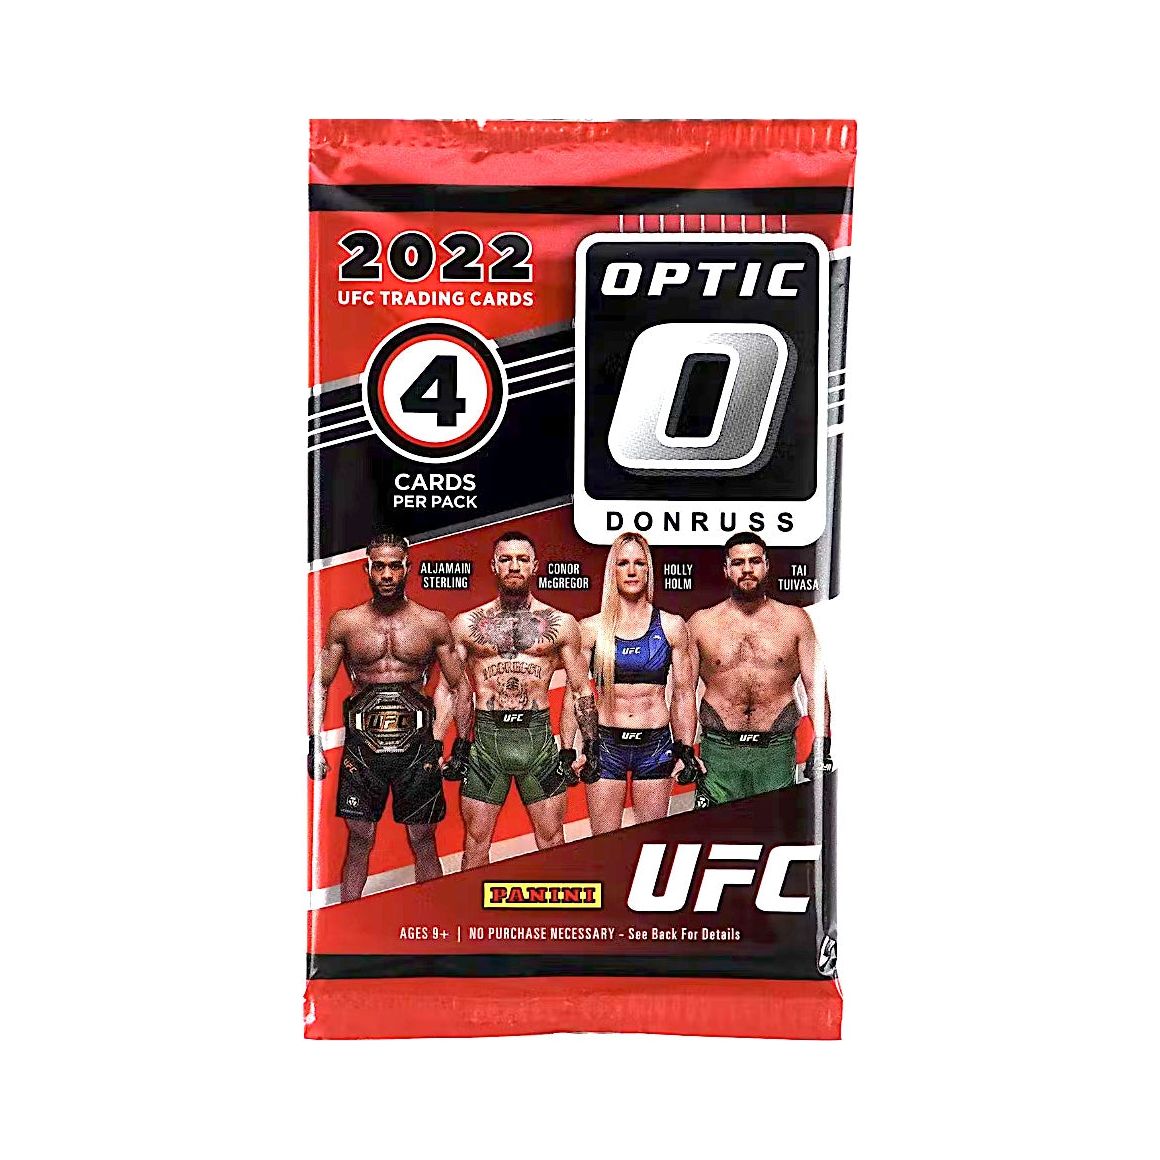 2022 Panini UFC Donruss Optic Hobby Pack (4 Cards)